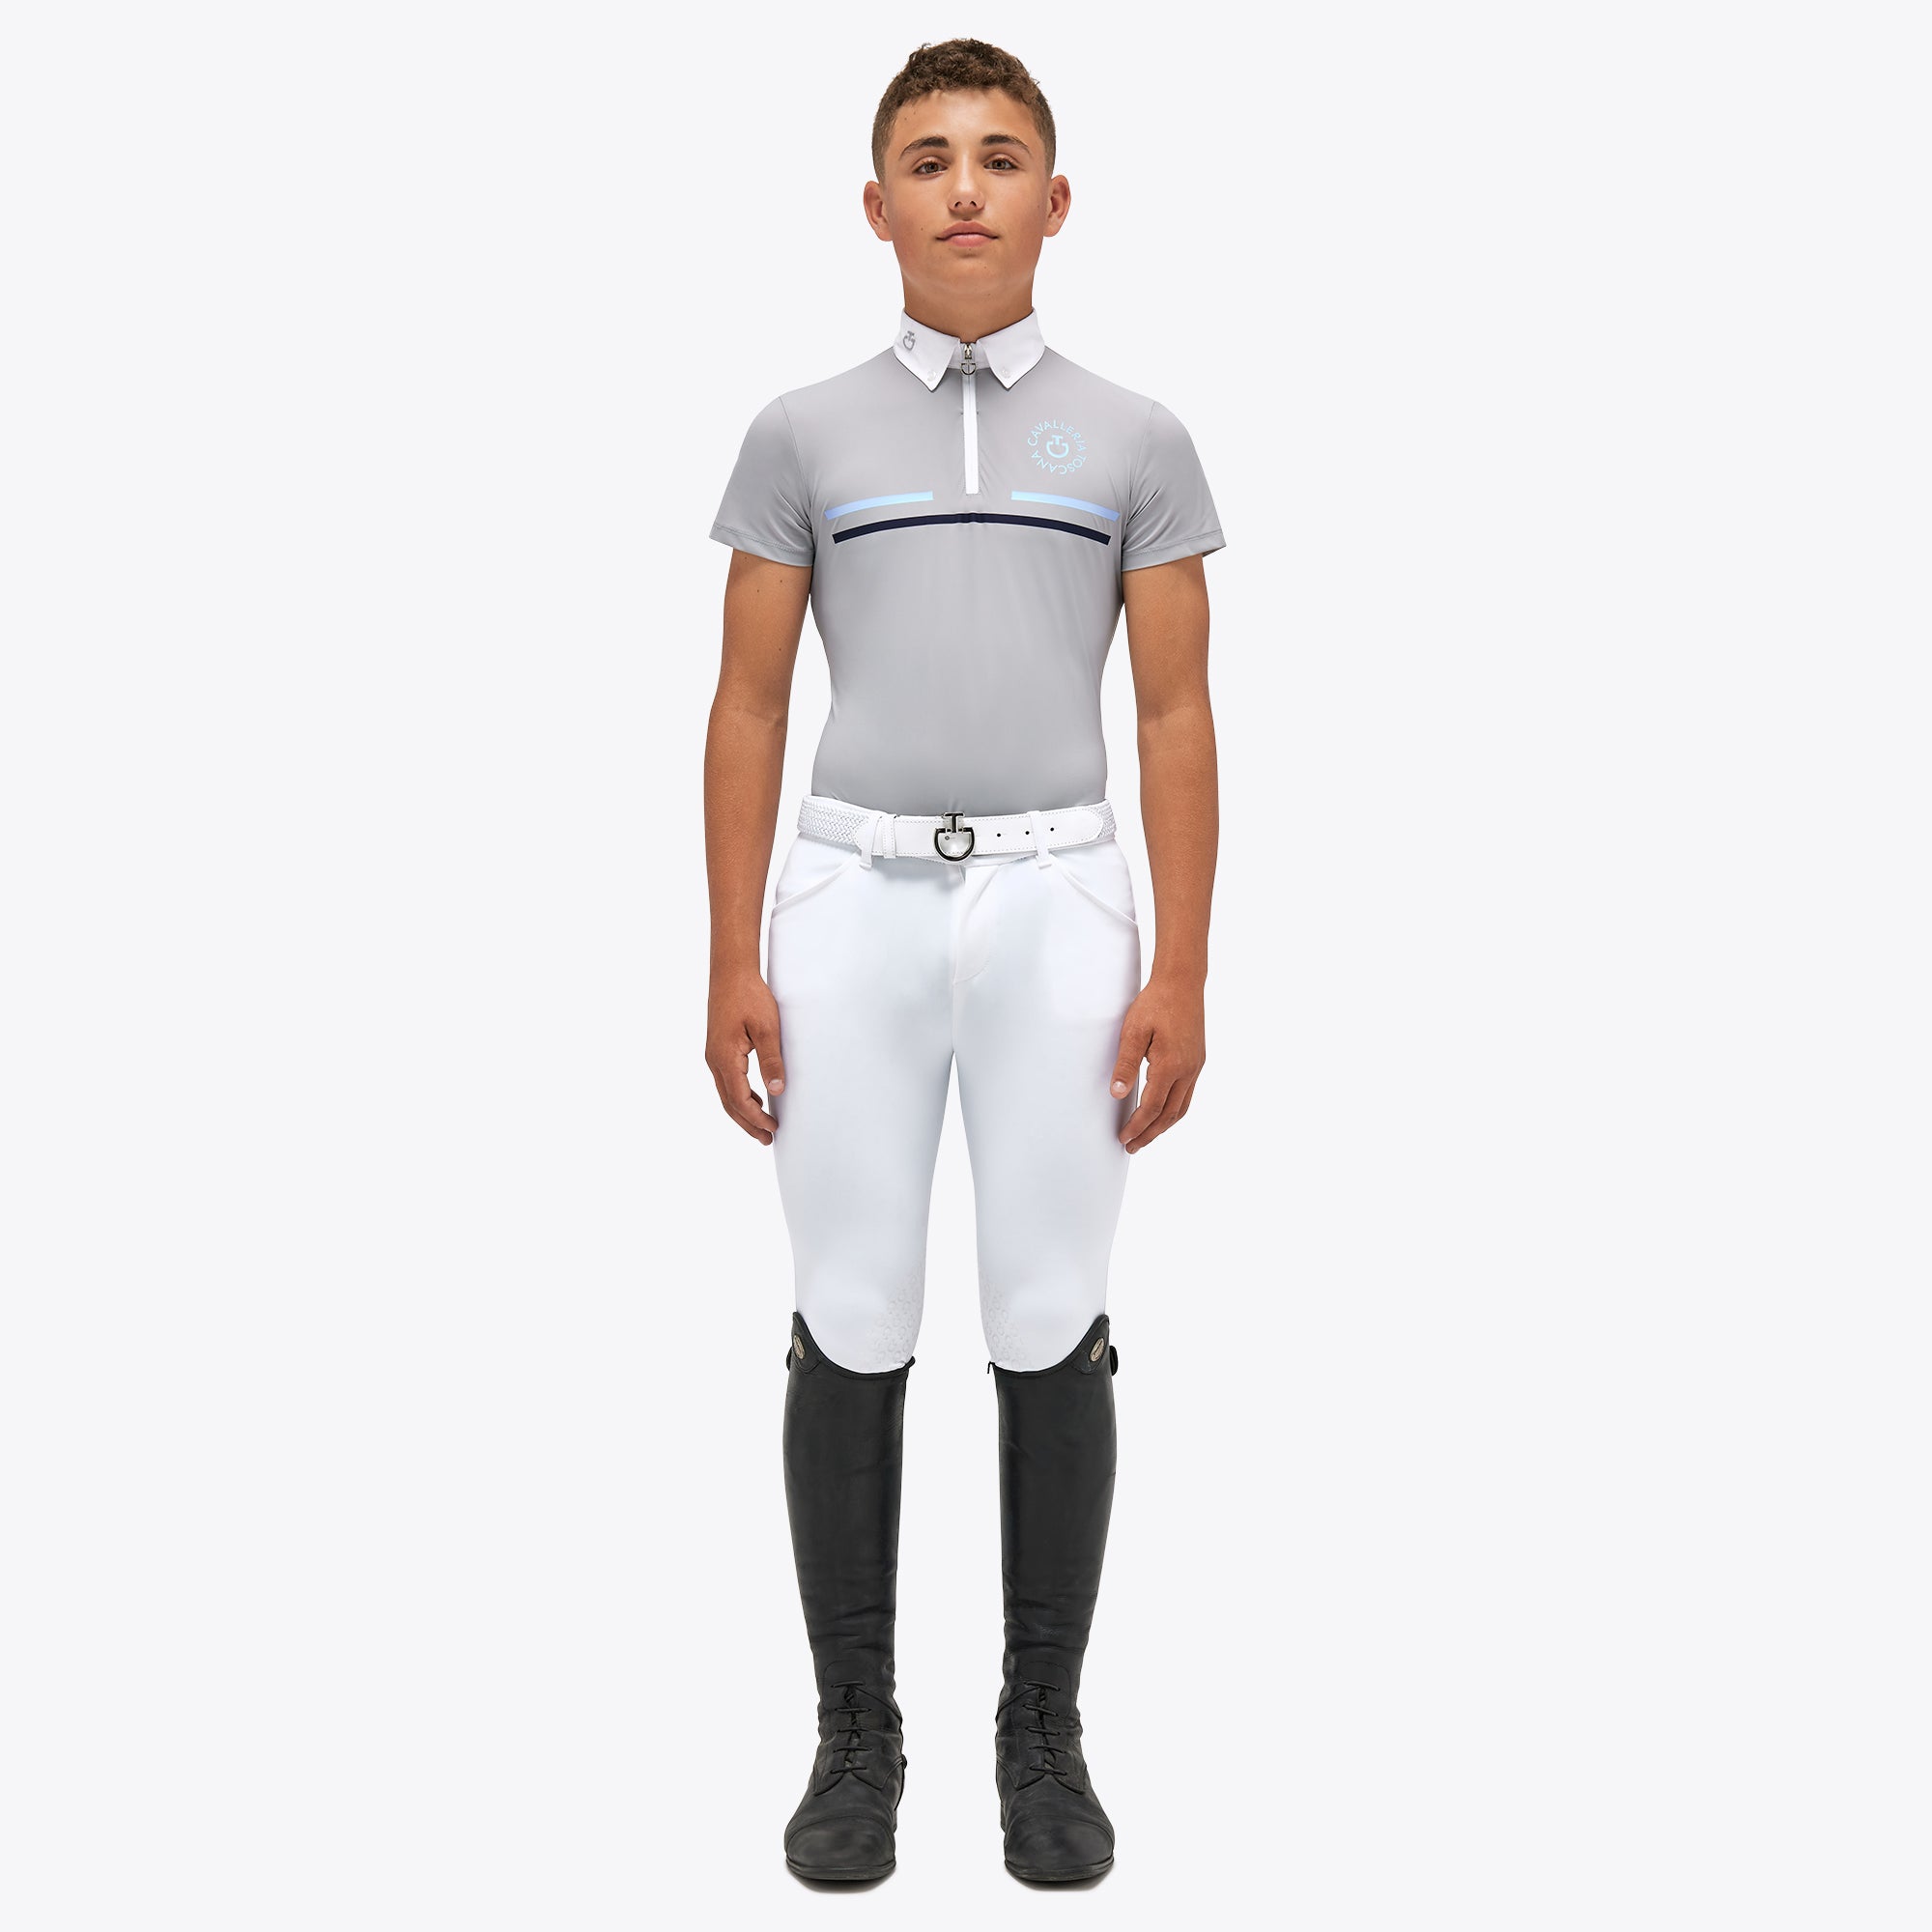 Boys CT Orbit Print Jersey Show Shirt - Light Grey